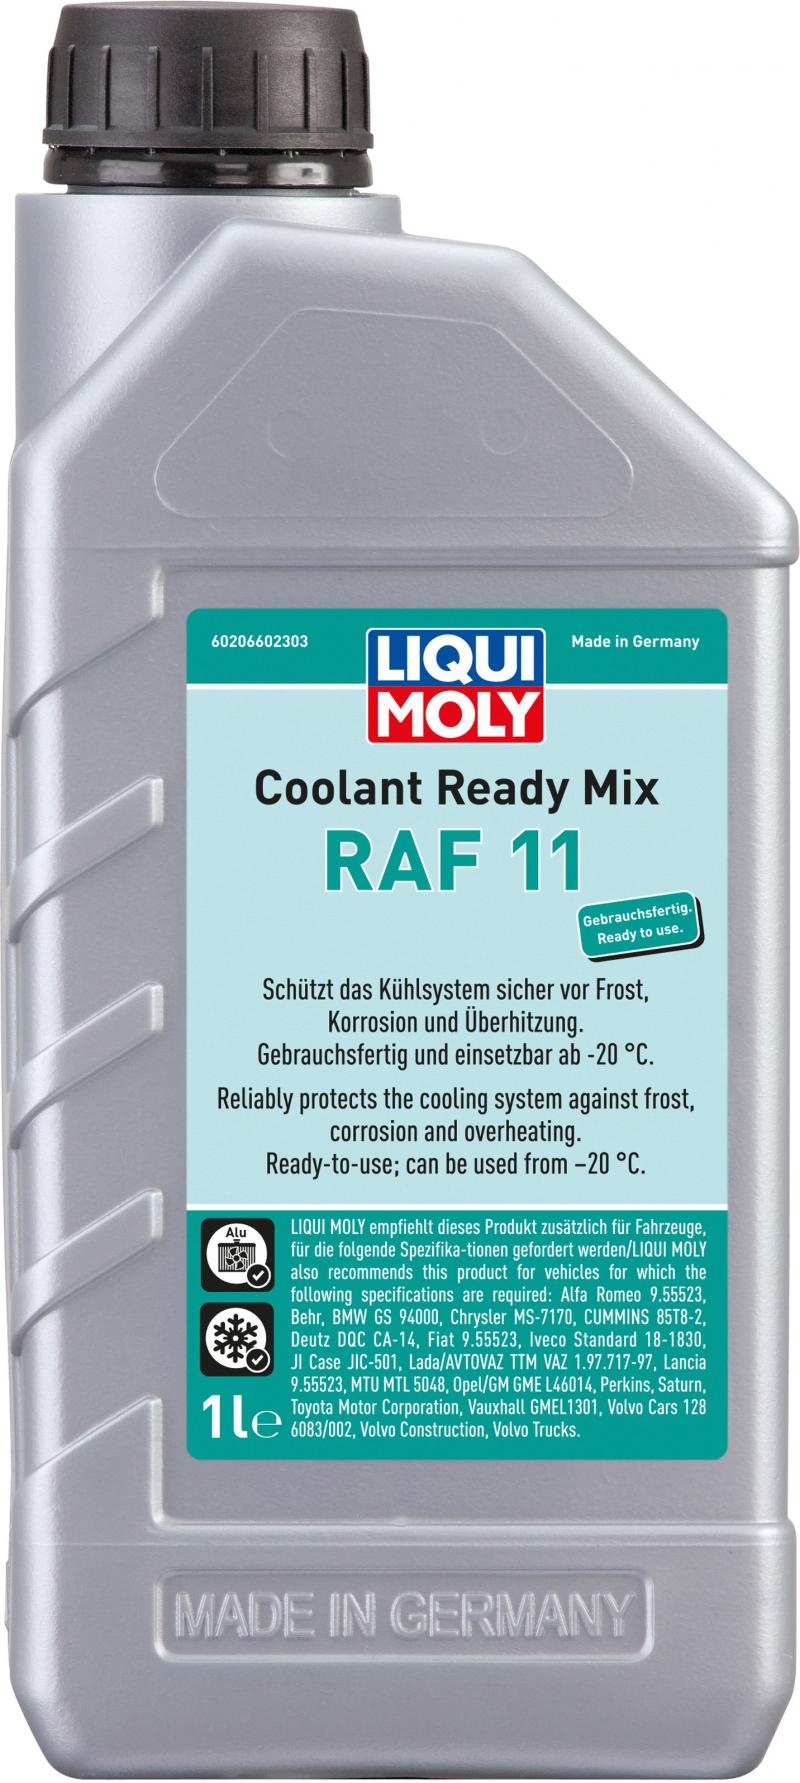 Liqui Moly Coolant Ready Mix Raf 11